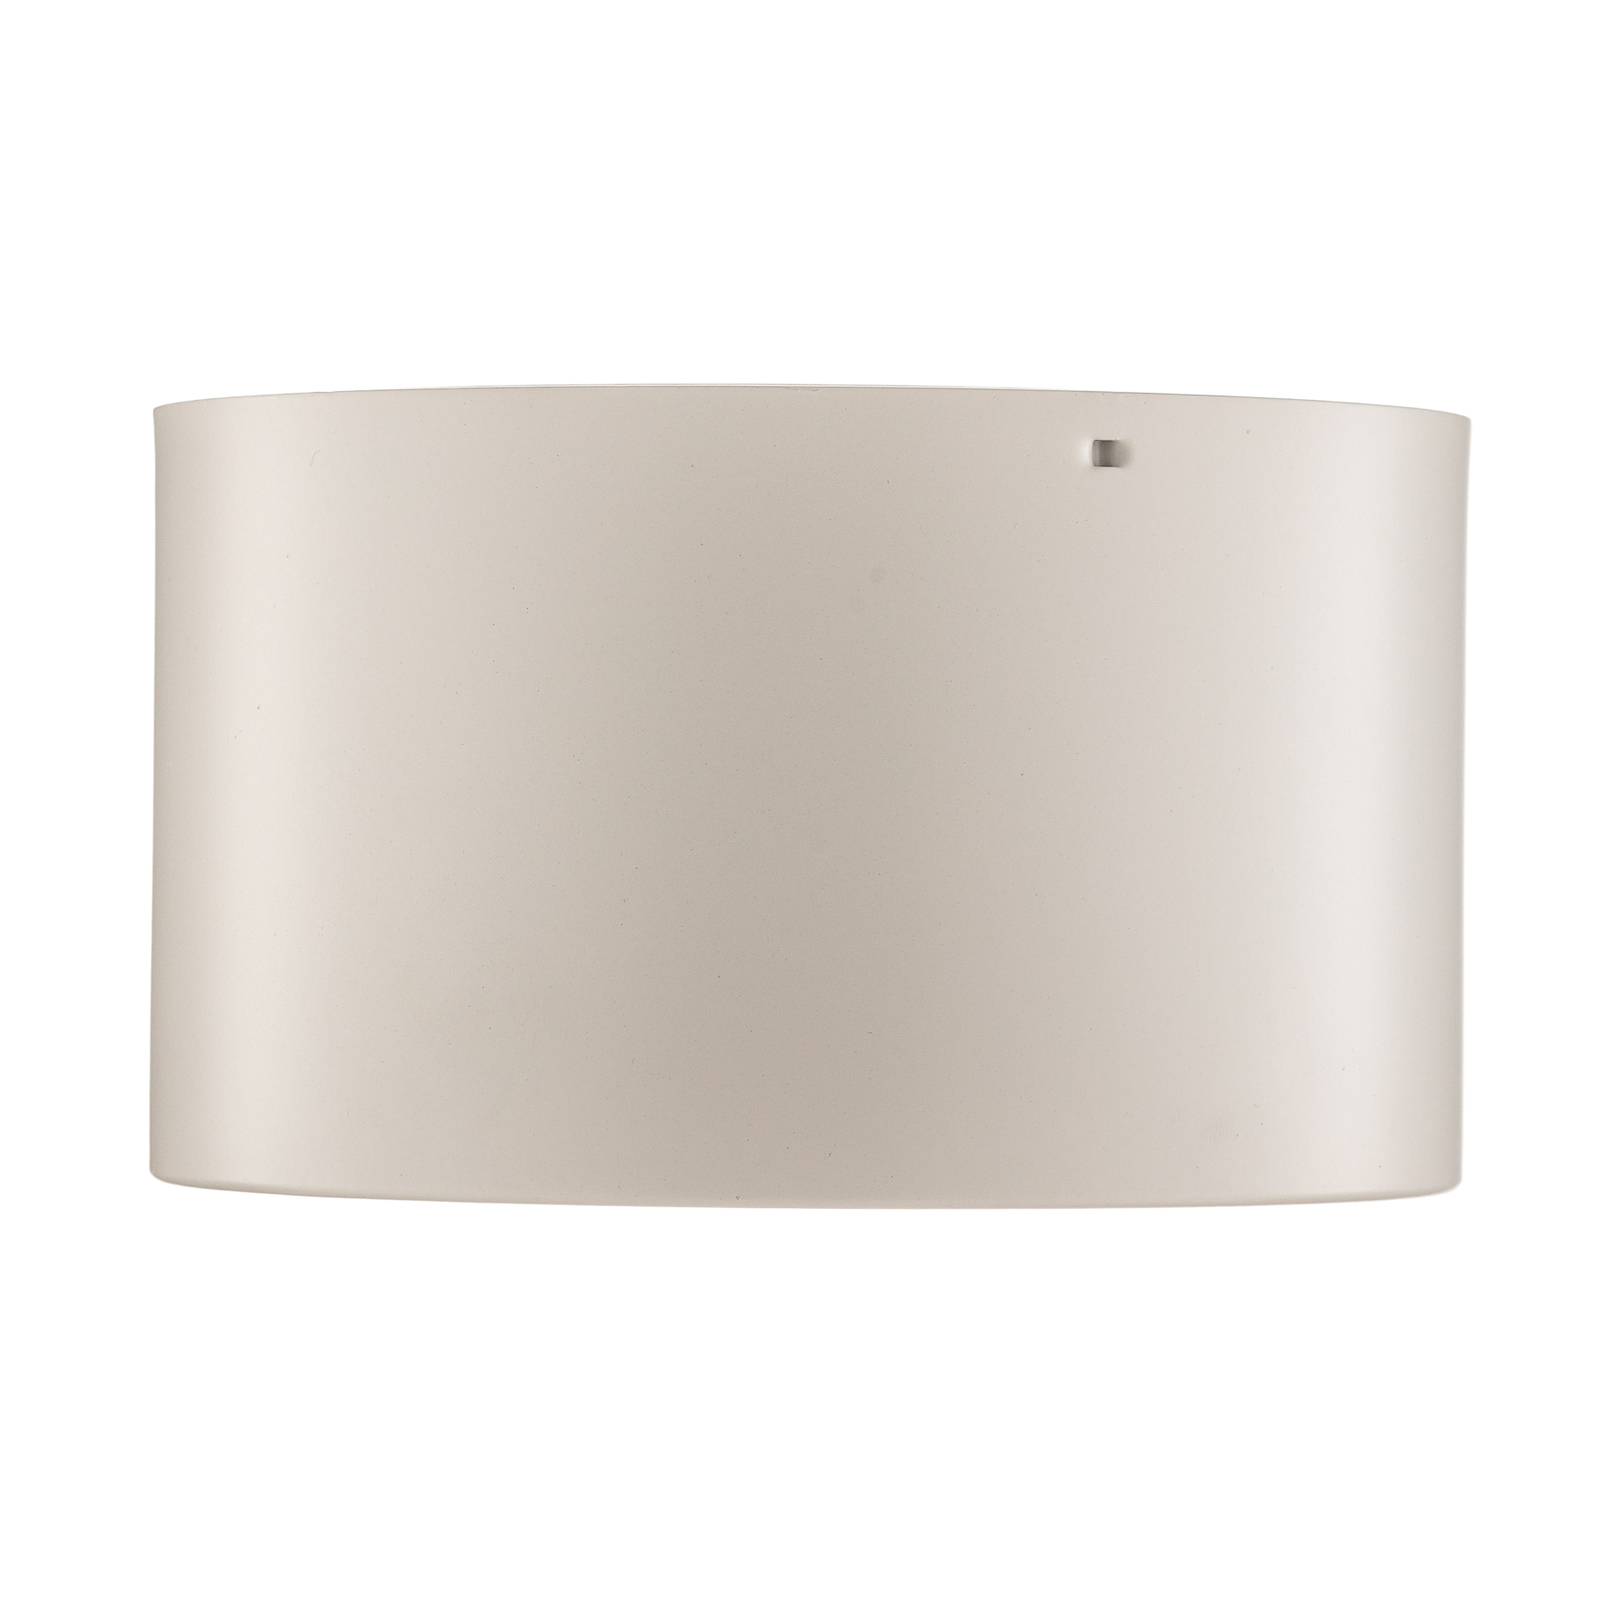 Ita LED downlight in wit met diffuser, Ø 15 cm